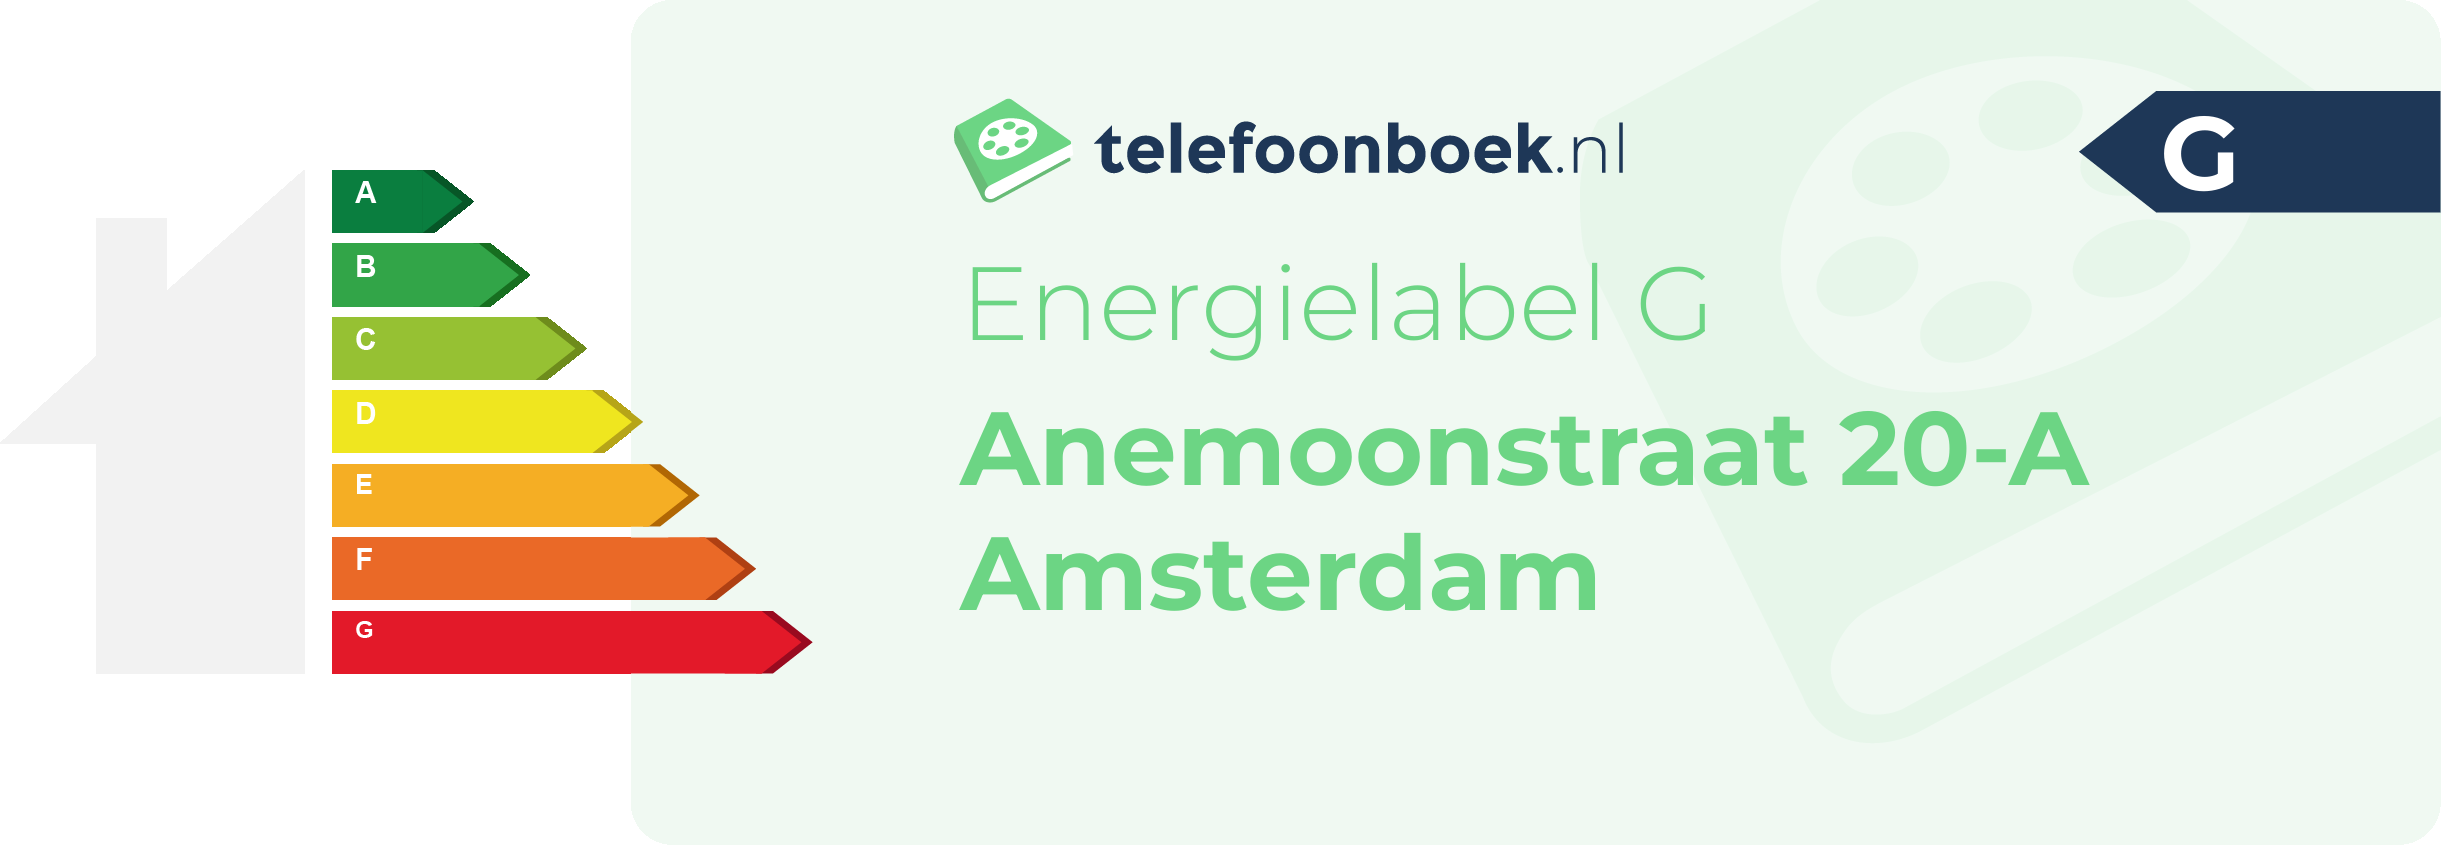 Energielabel Anemoonstraat 20-A Amsterdam